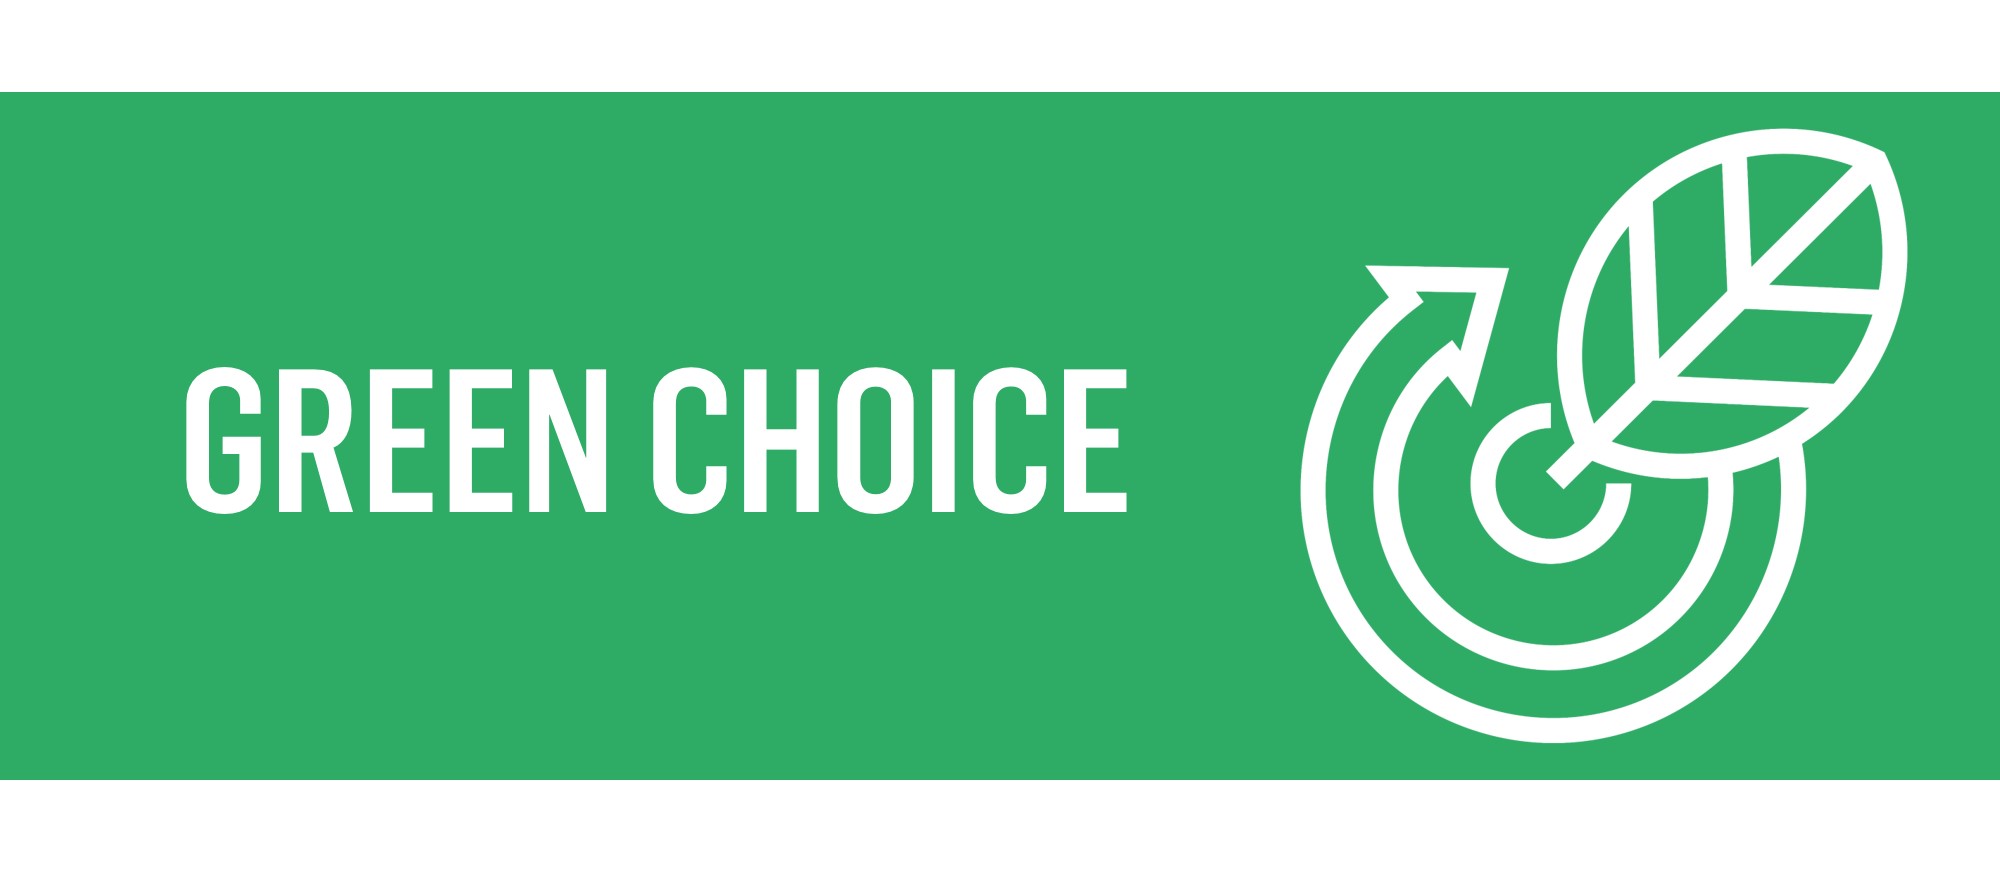 havep green choice label